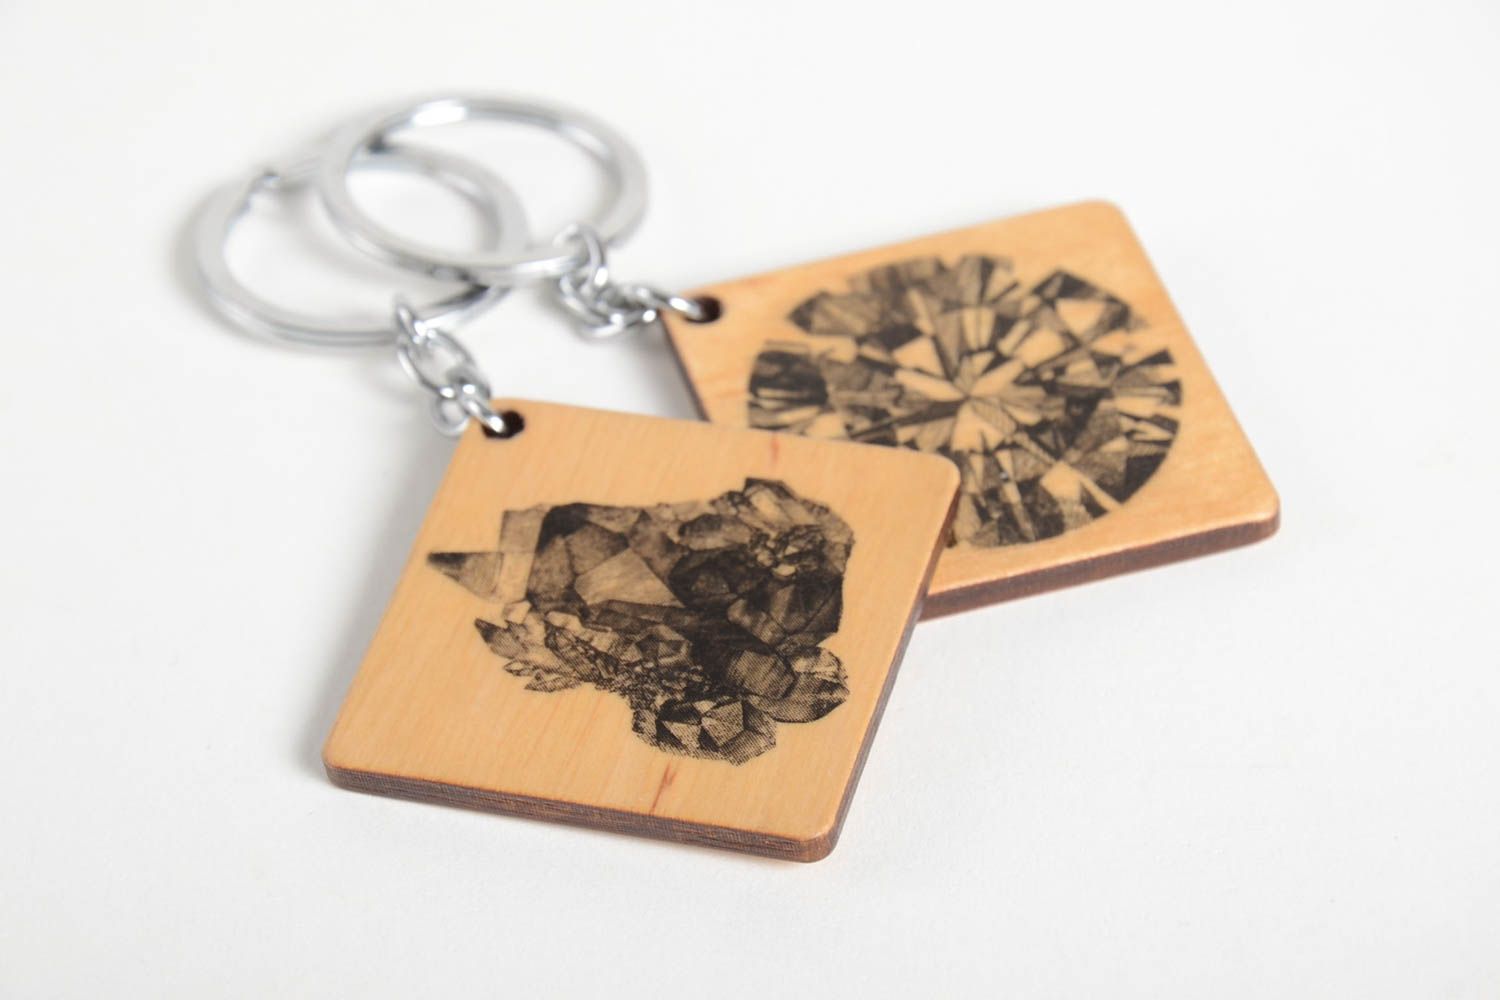 Handmade keychain designer keychains wooden souvenirs gift for him 2 items photo 4